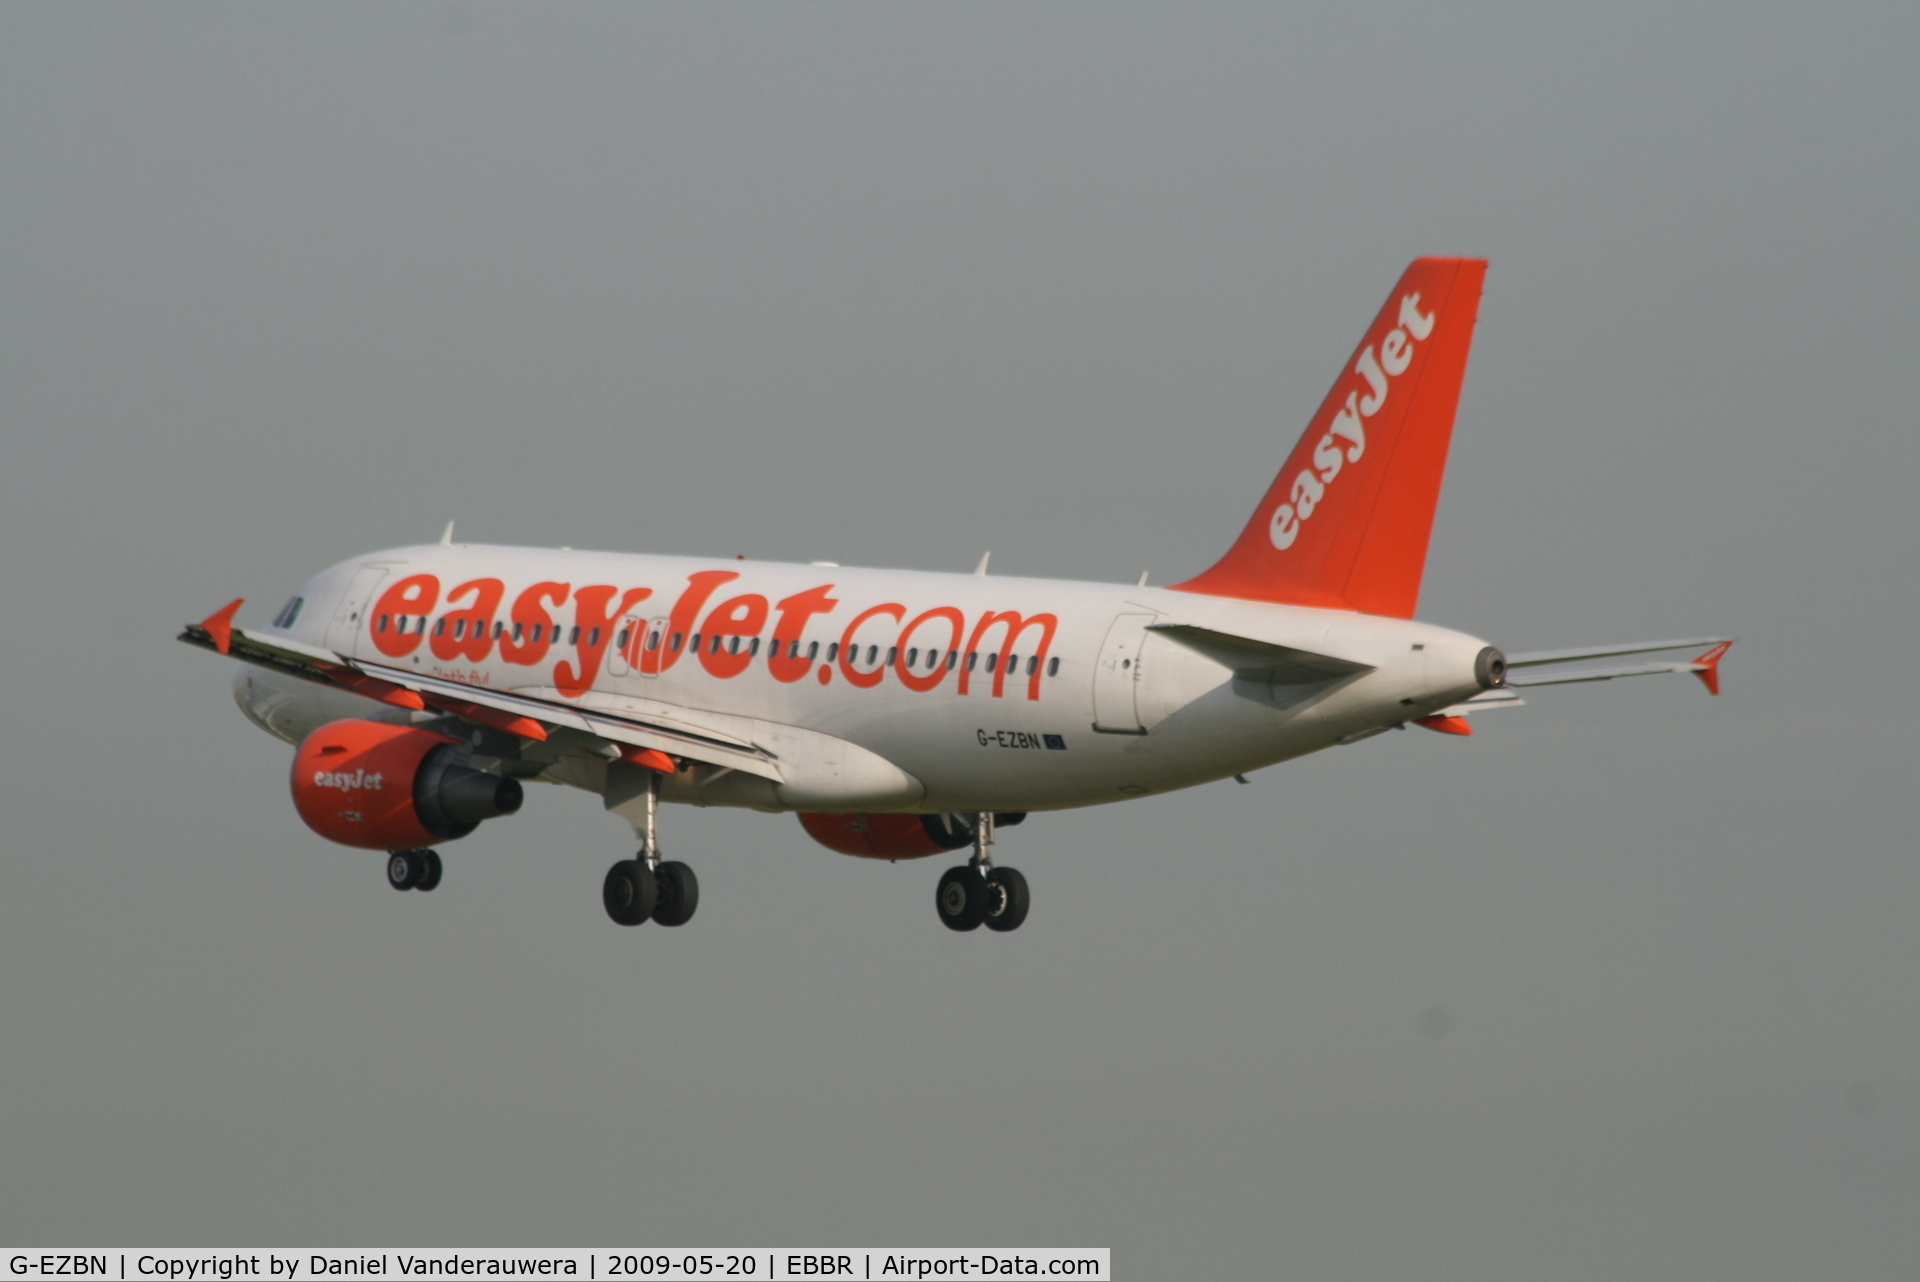 G-EZBN, 2007 Airbus A319-111 C/N 3061, Flight EZY2795 is descending to RWY 25L